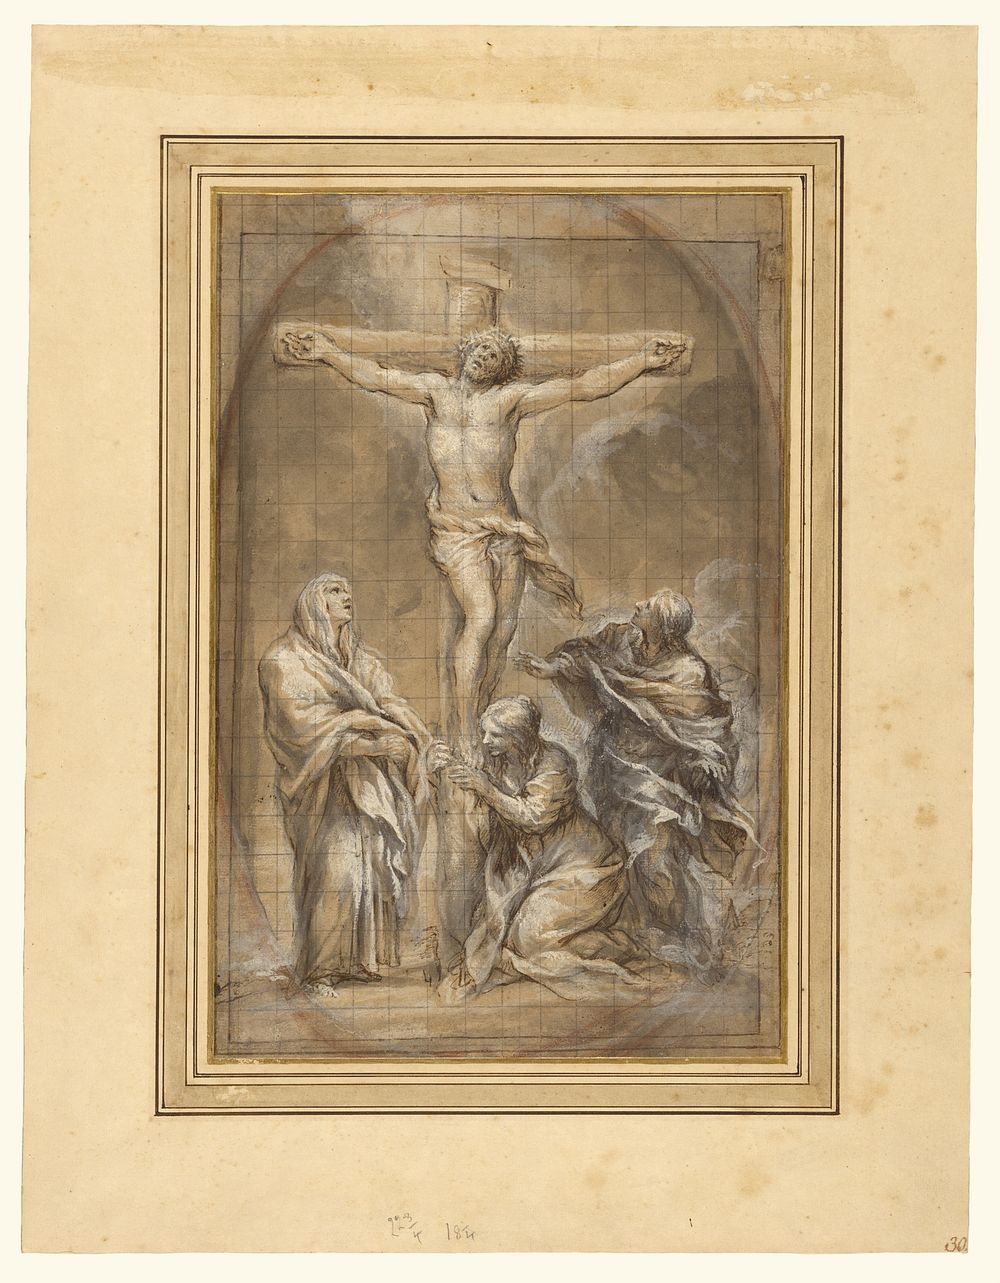 Christ on the Cross with the Virgin Mary, Mary Magdalene, and Saint John by Pietro da Cortona